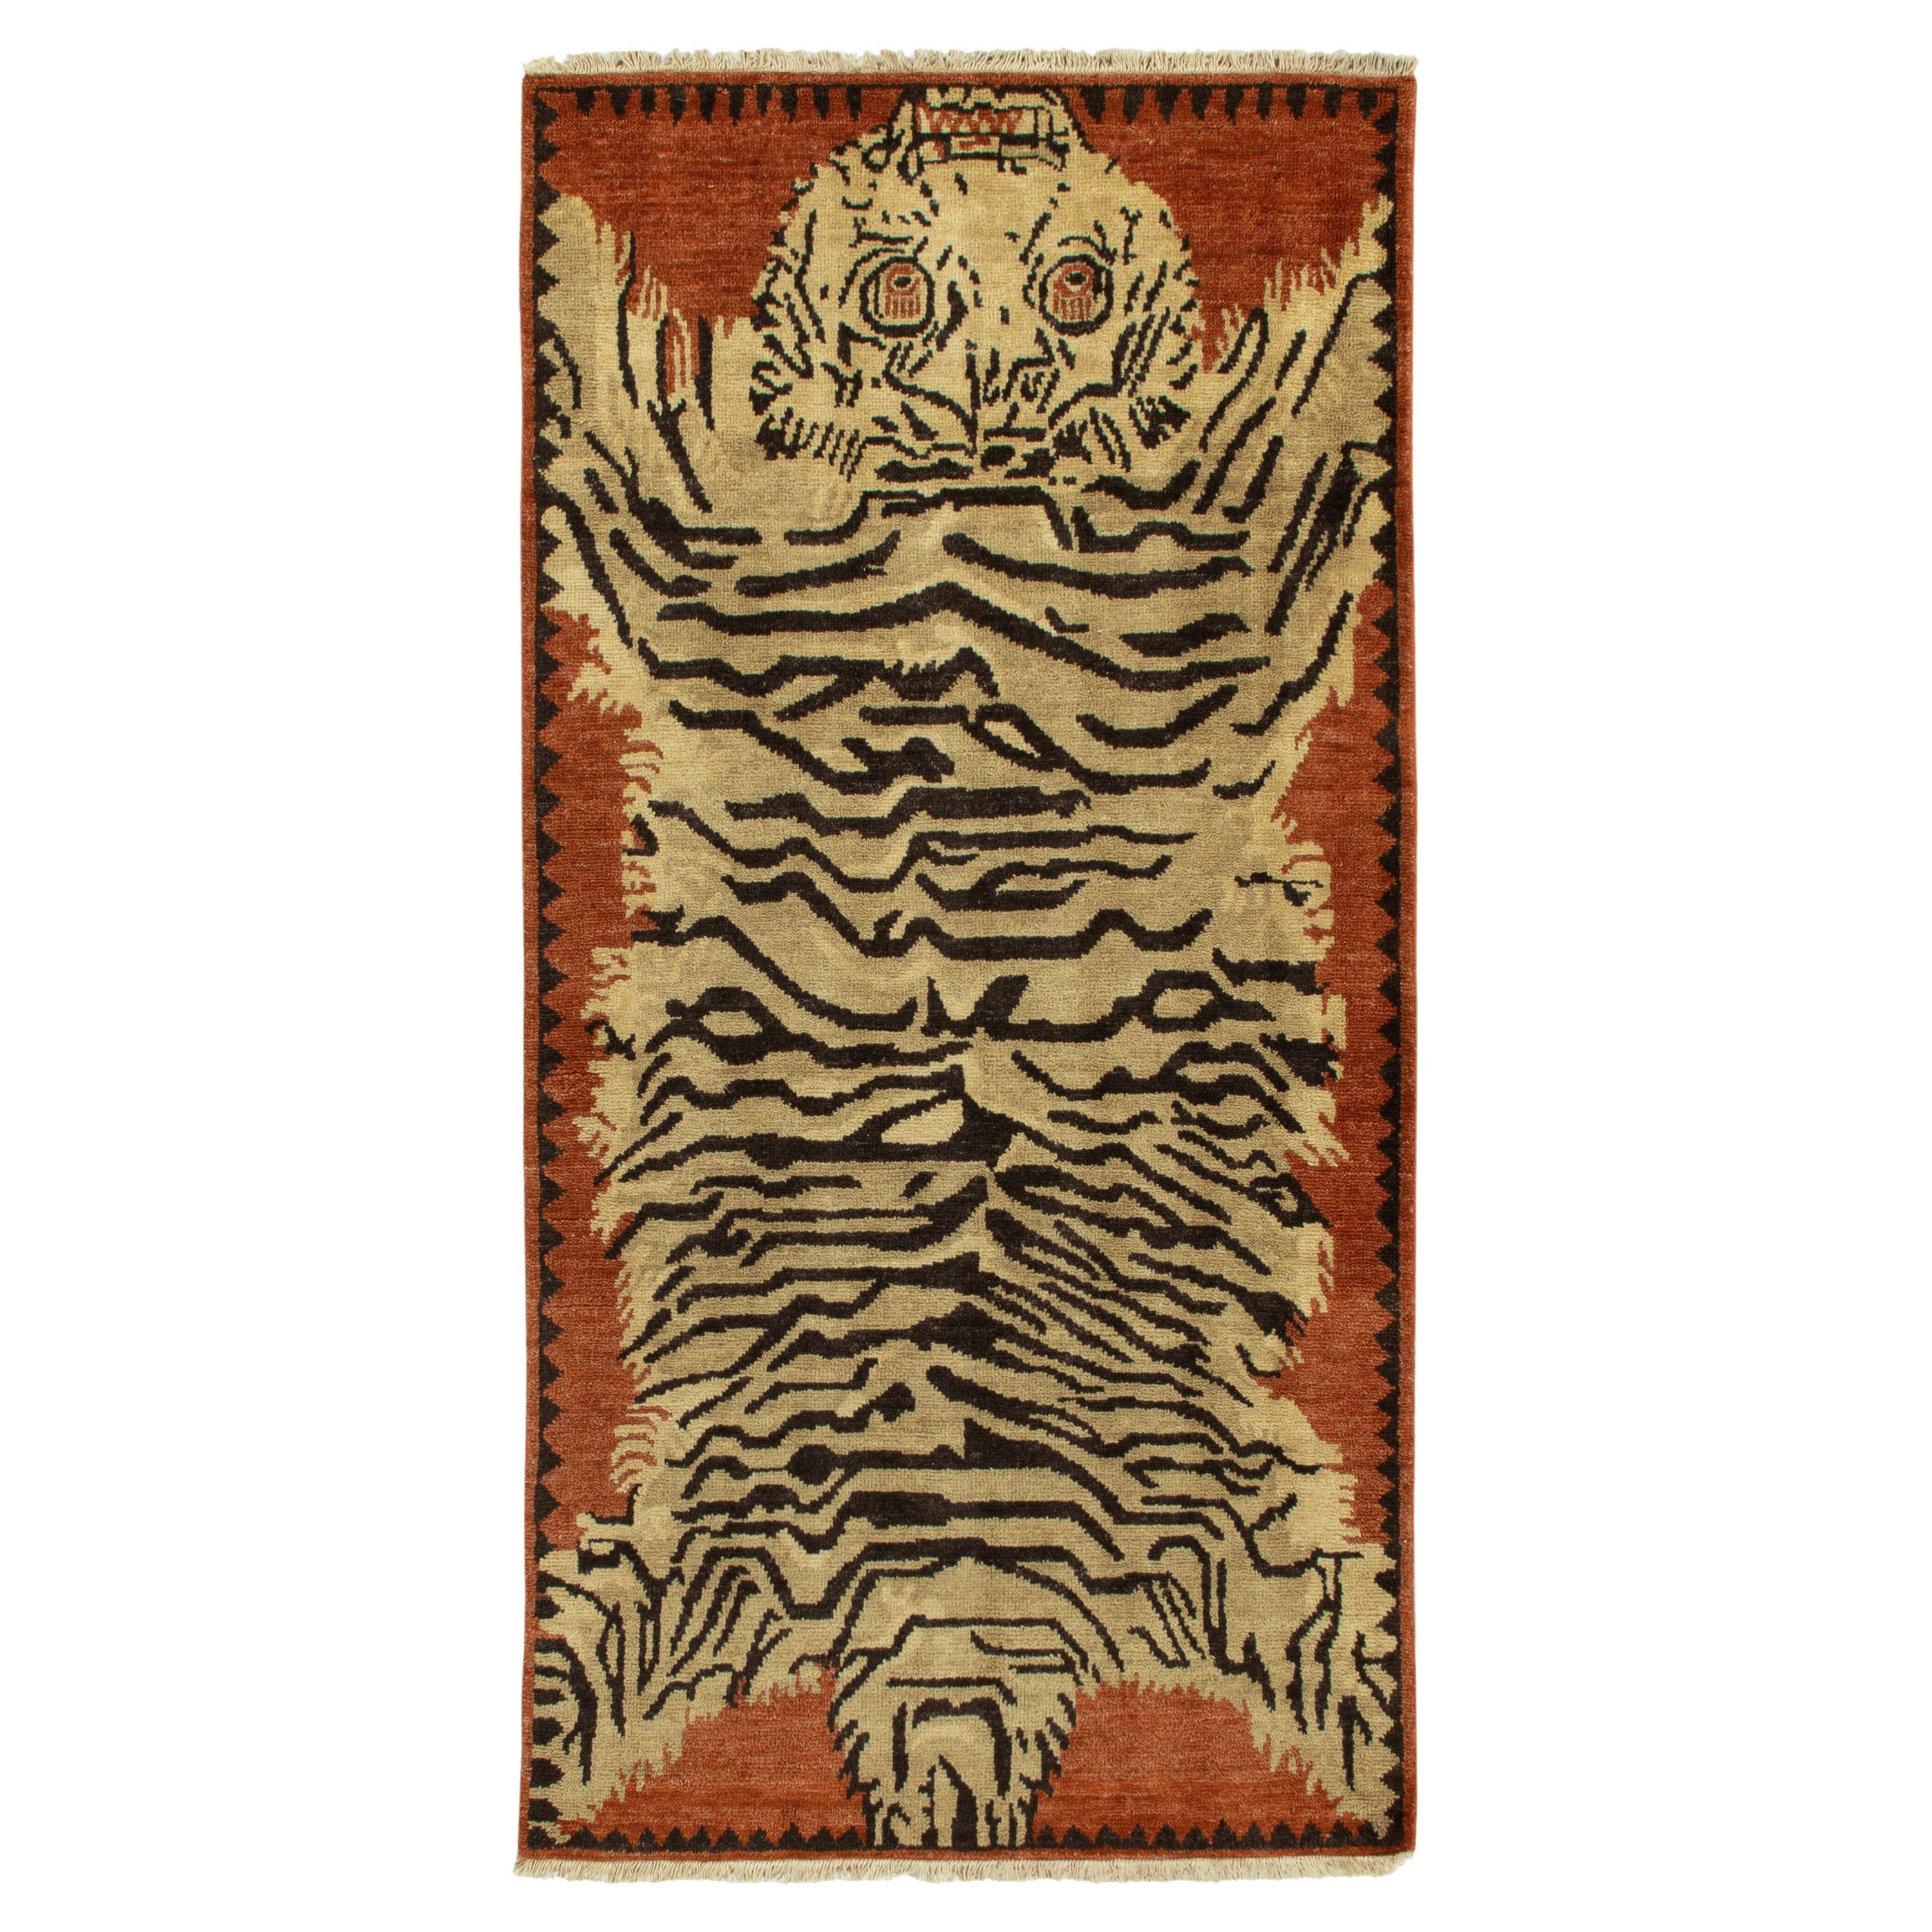 Rug & Kilim's Tiger Skin Style Contemporary Runner, Gold, Orange, Black For Sale